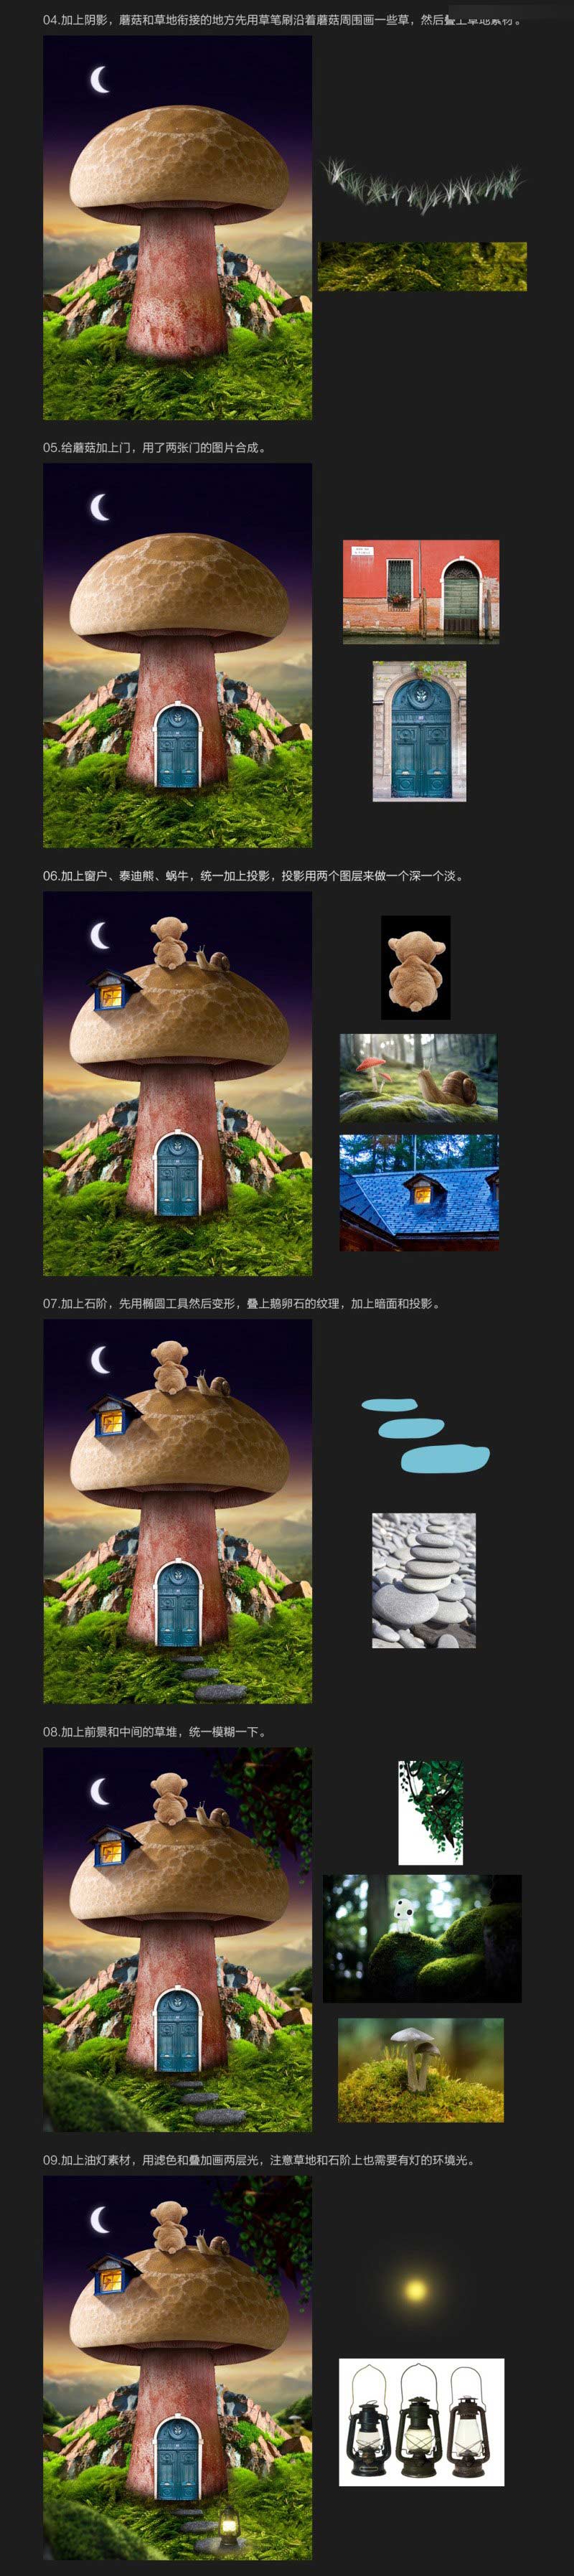 Photoshop图片合成梦幻童话风格的蘑菇房创意海报